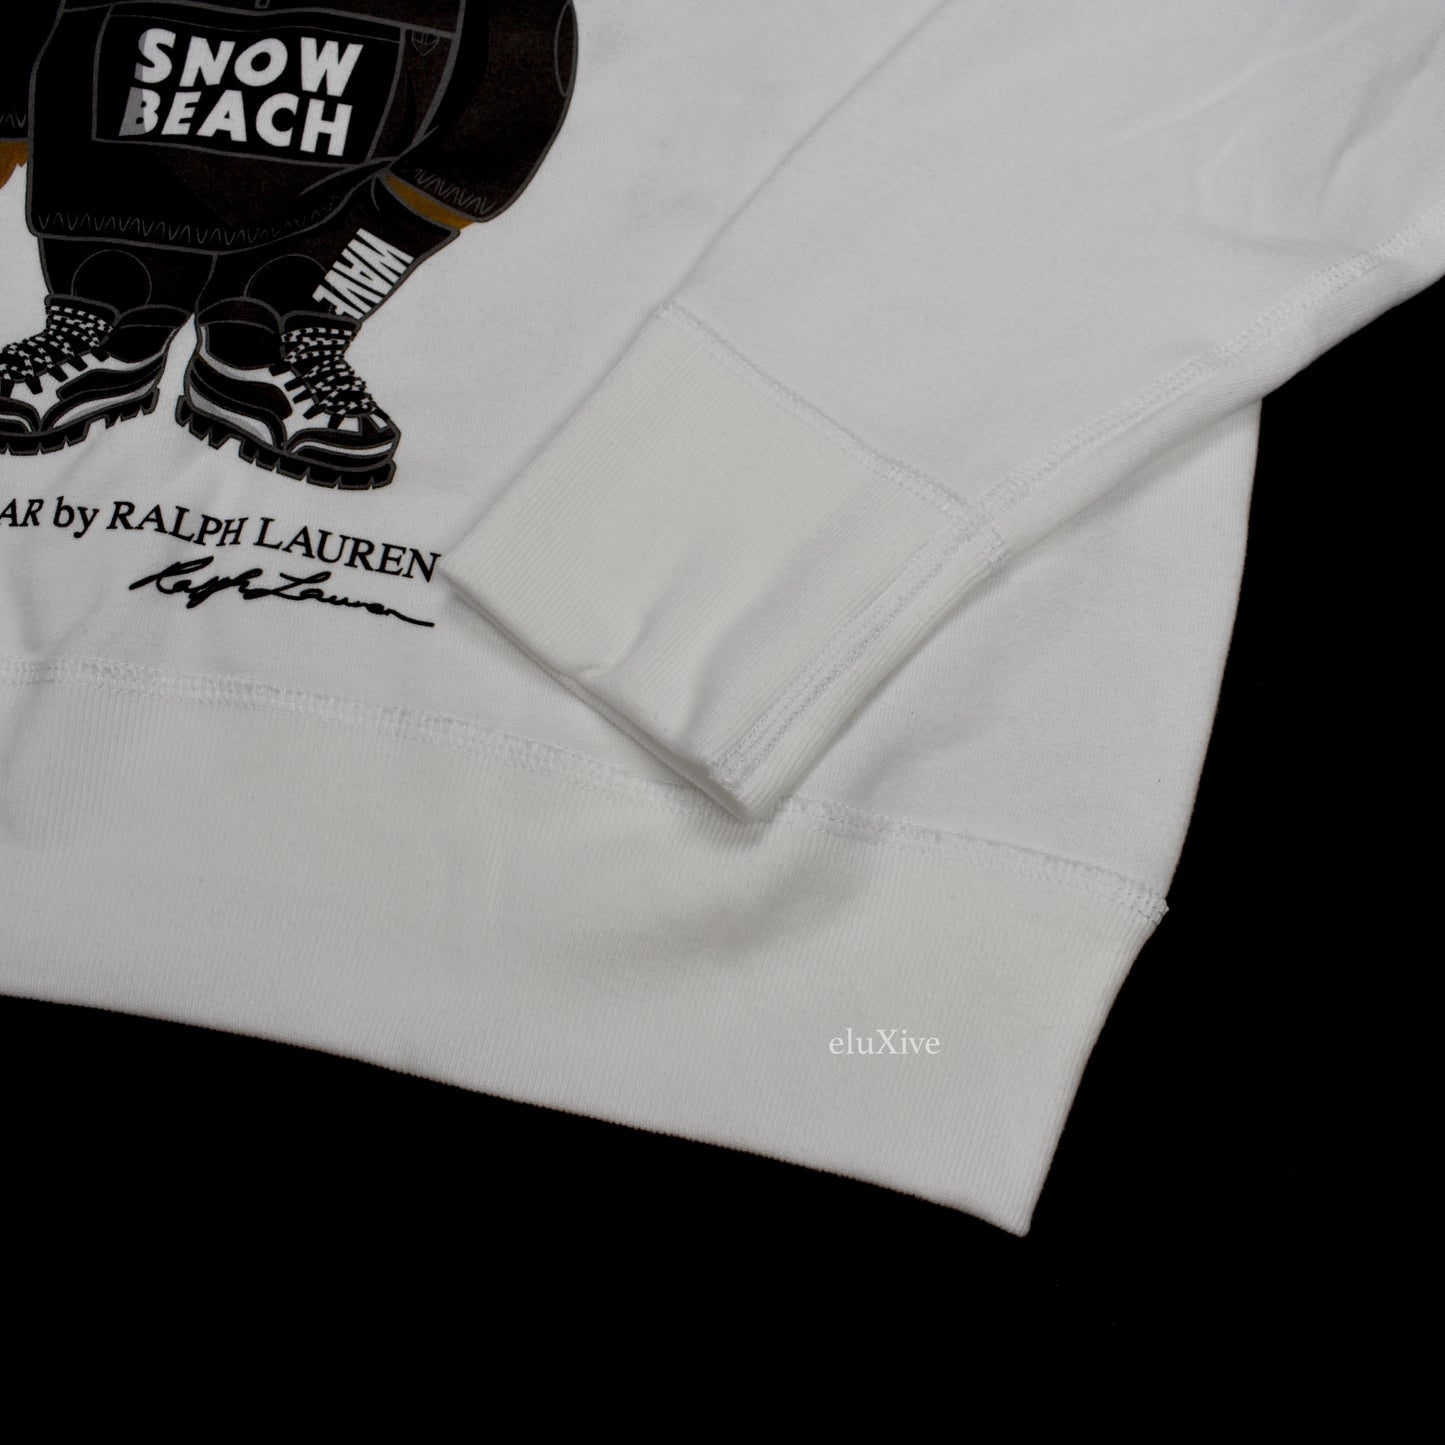 Polo Ralph Lauren - Snow Beach Monochrome Bear Sweatshirt